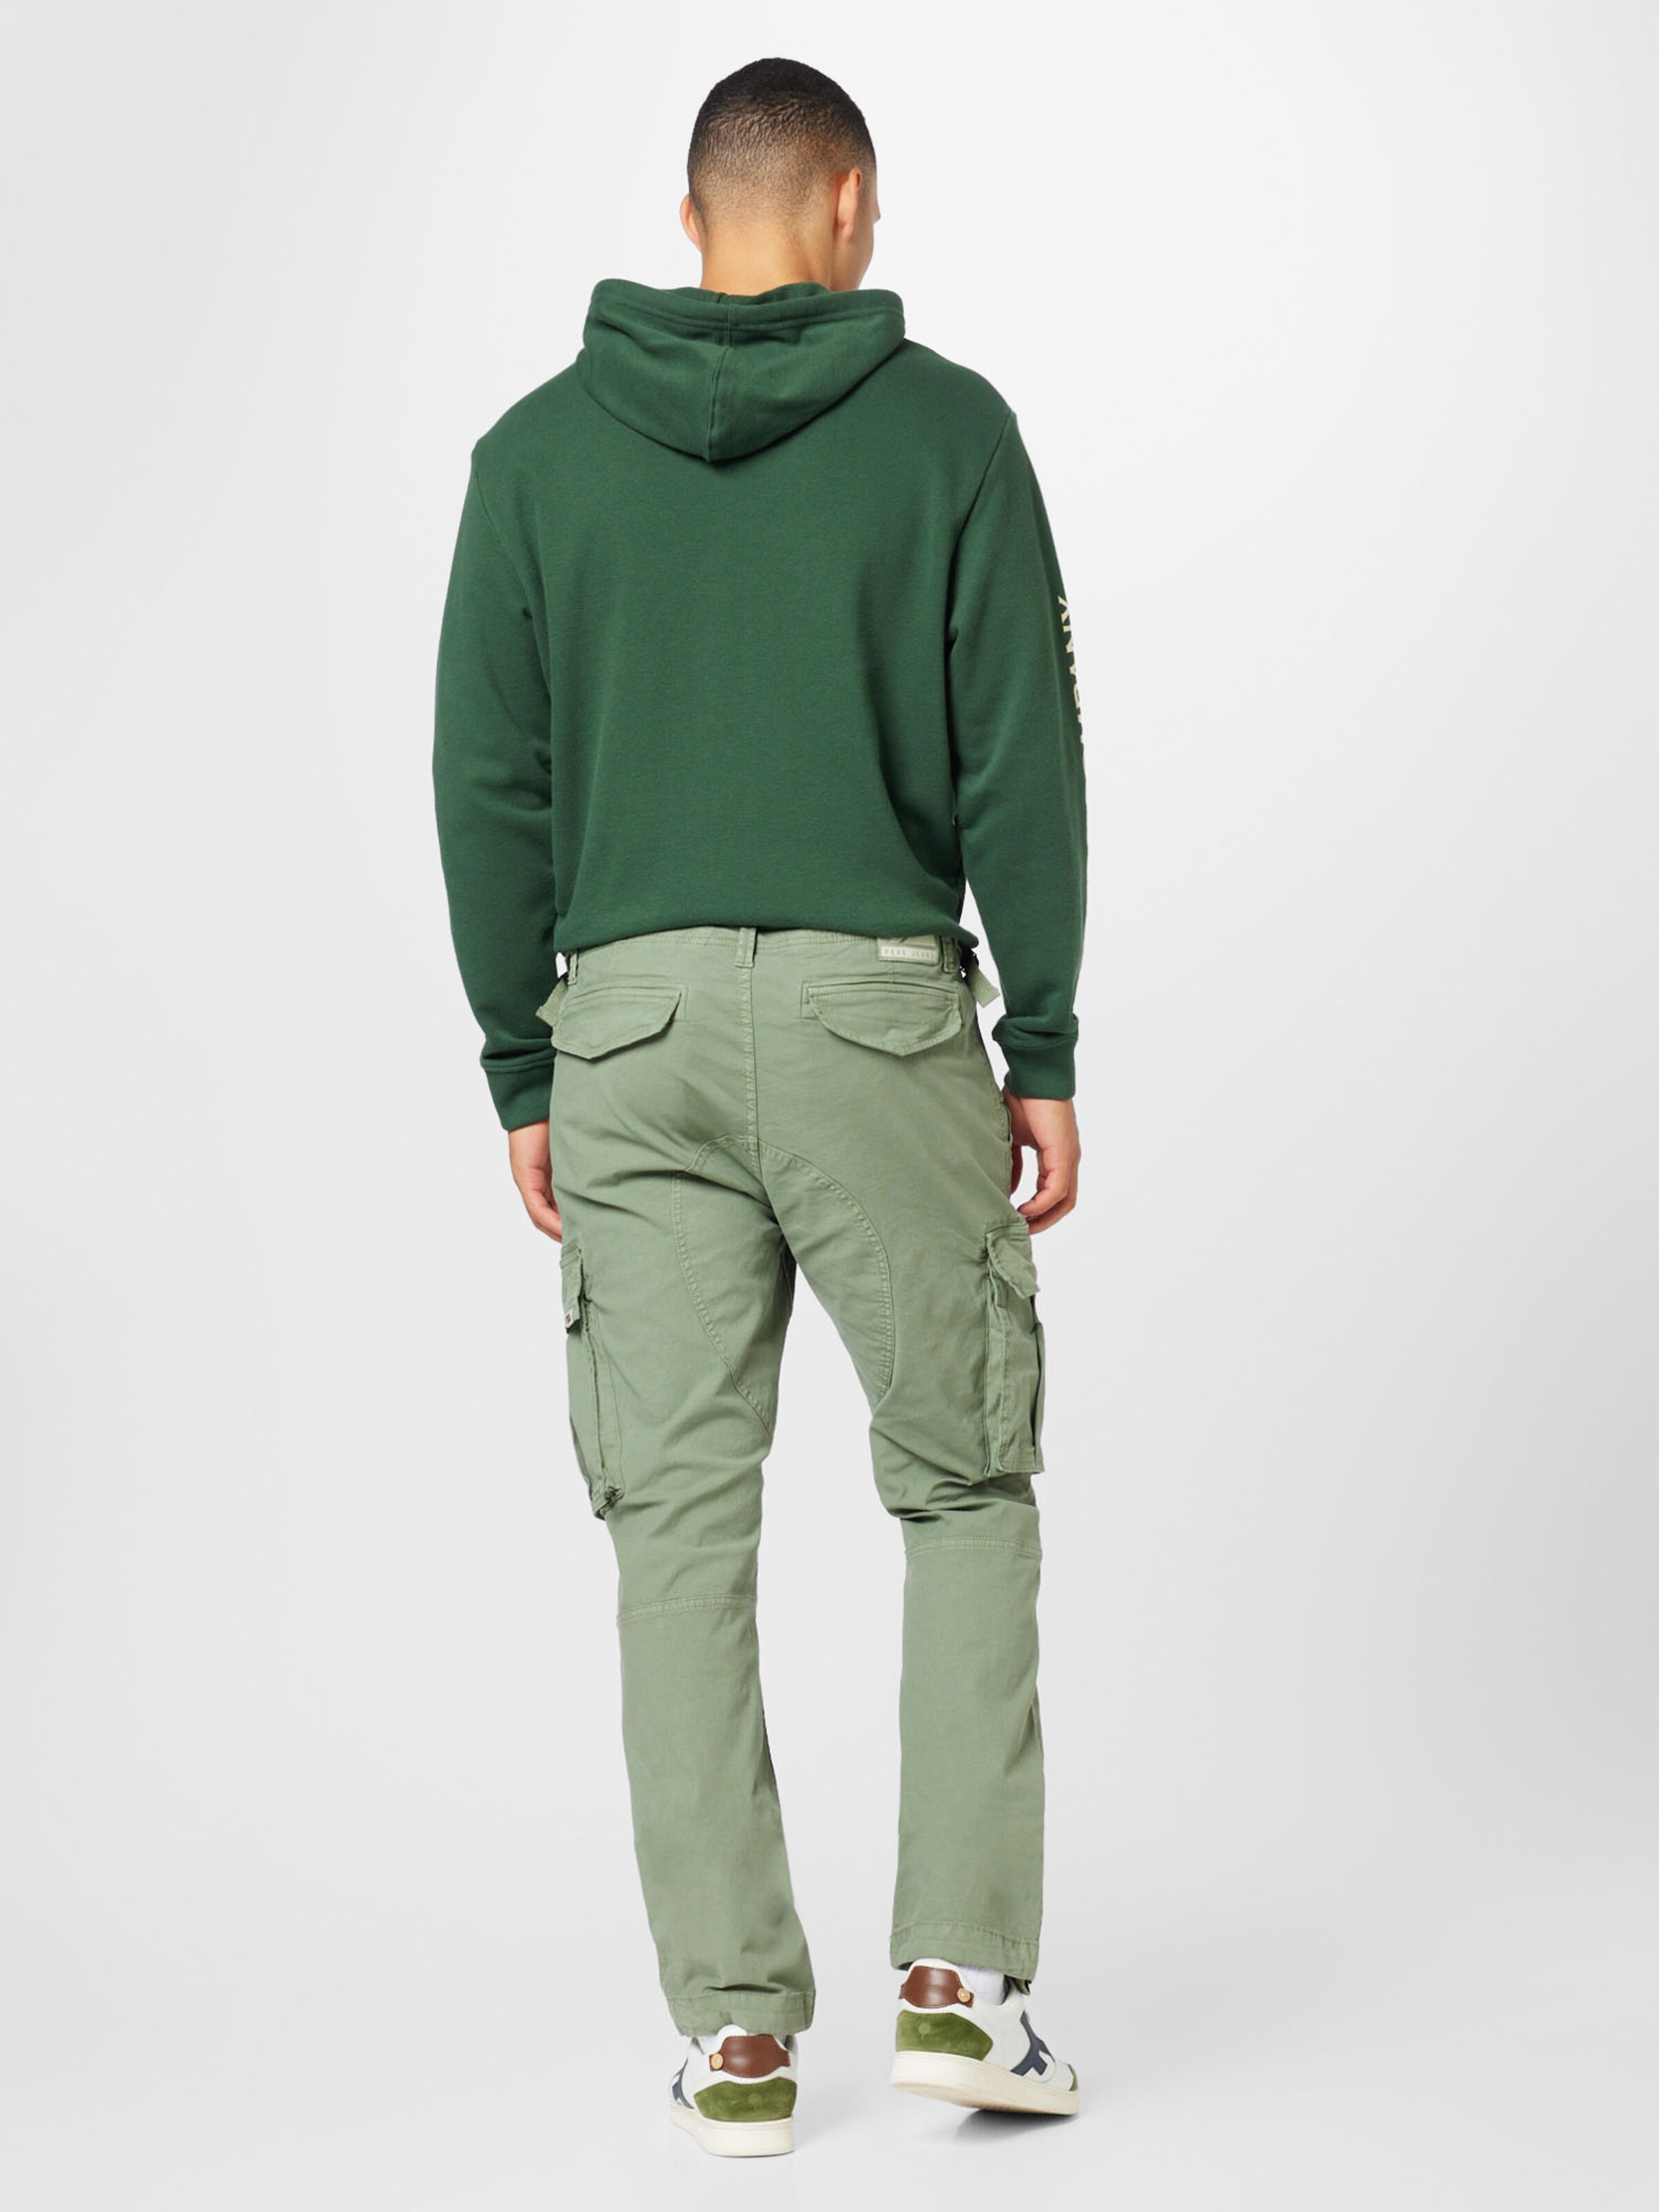 Pepe Jeans MULTI POCKETS - Cargo trousers - umber green/olive - Zalando.de